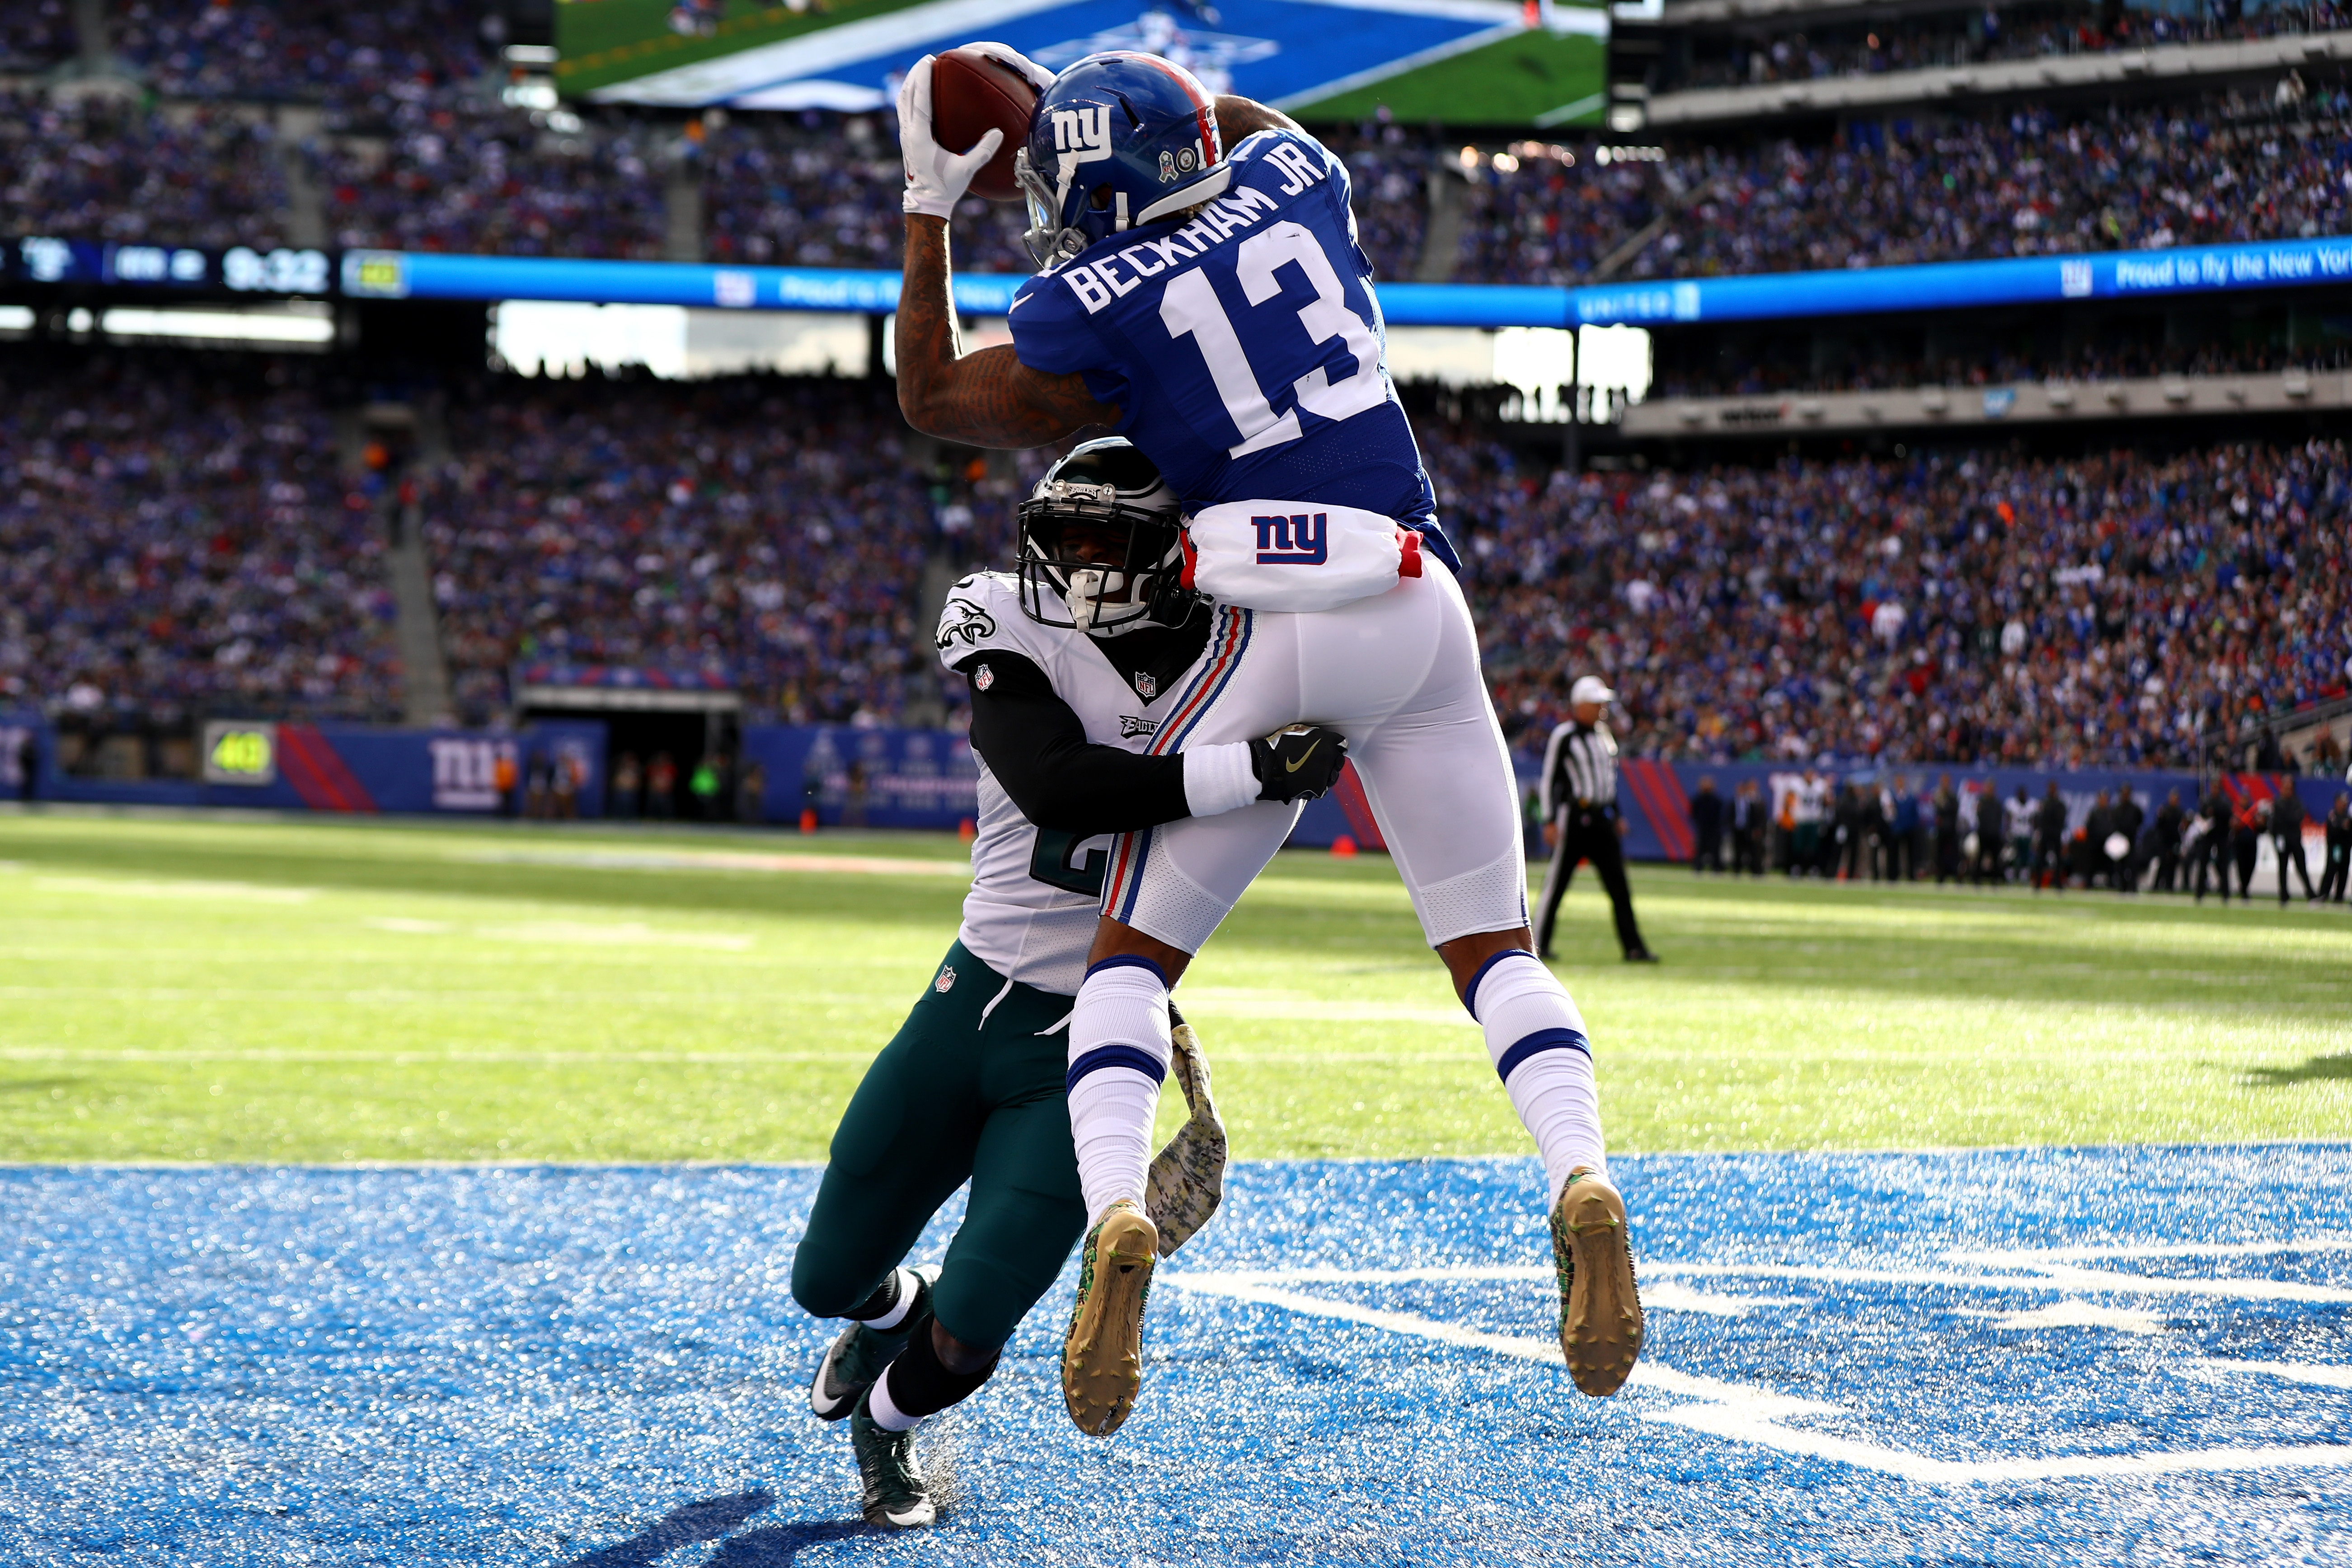 New York Giants' wide receiver Odell Beckham Jr. makes a touchdown catch.